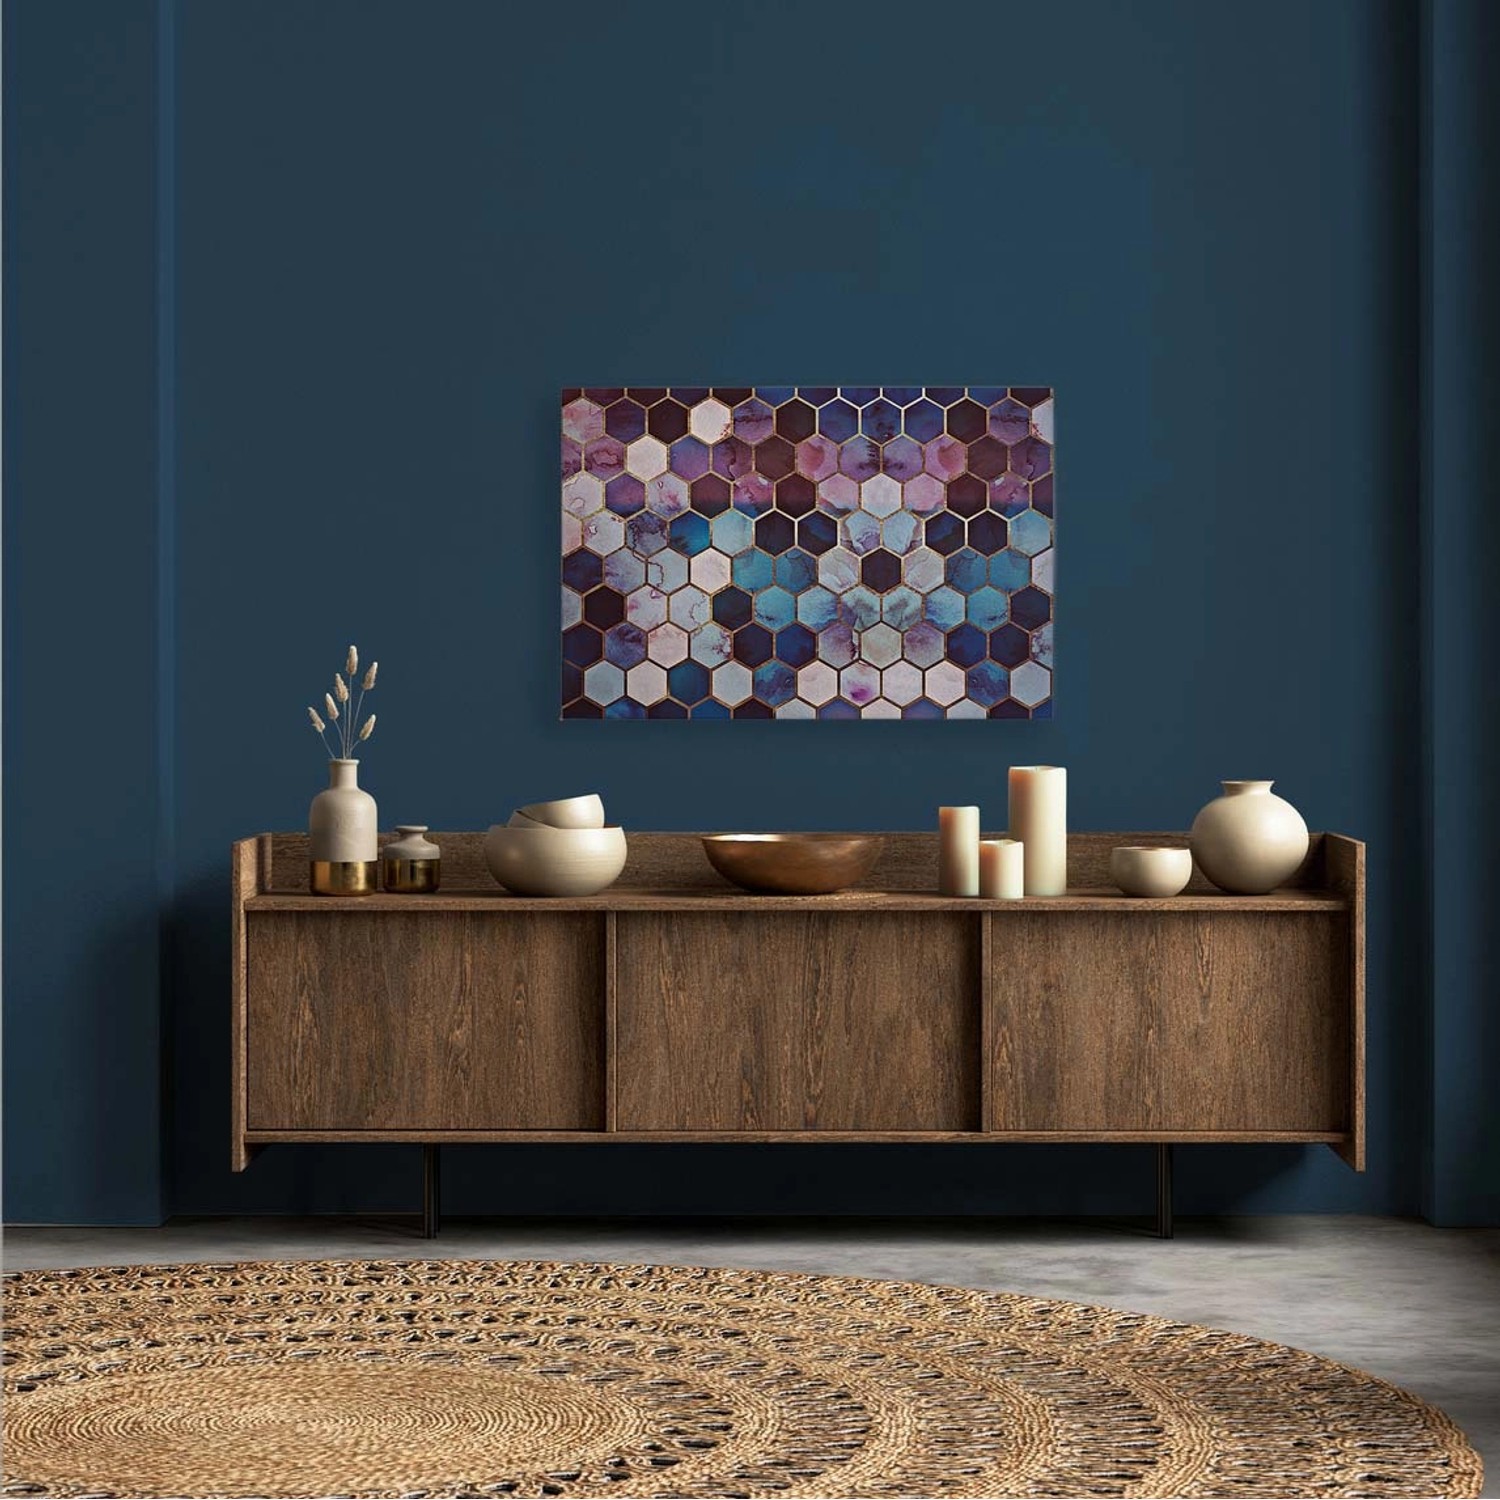 Bricoflor Leinwandbild In Aquarell Optik Wandbild In Lila Violett Deko Bild Mit Hexagon Design Wabenmuster Marmor In 90 